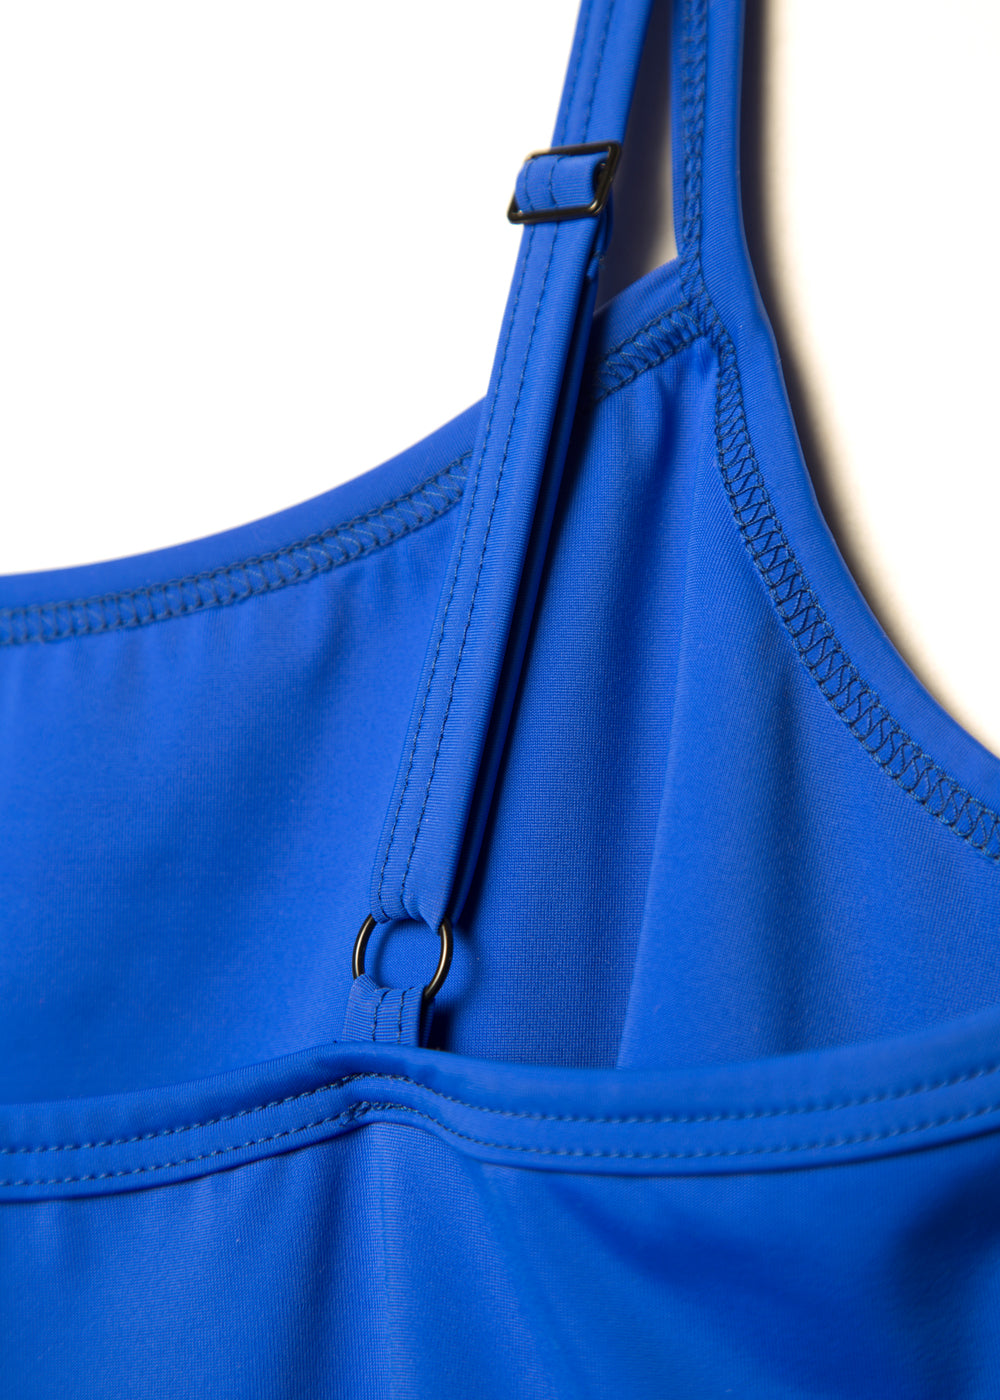 Swimsuit - Verzasca - Cobalt Blue